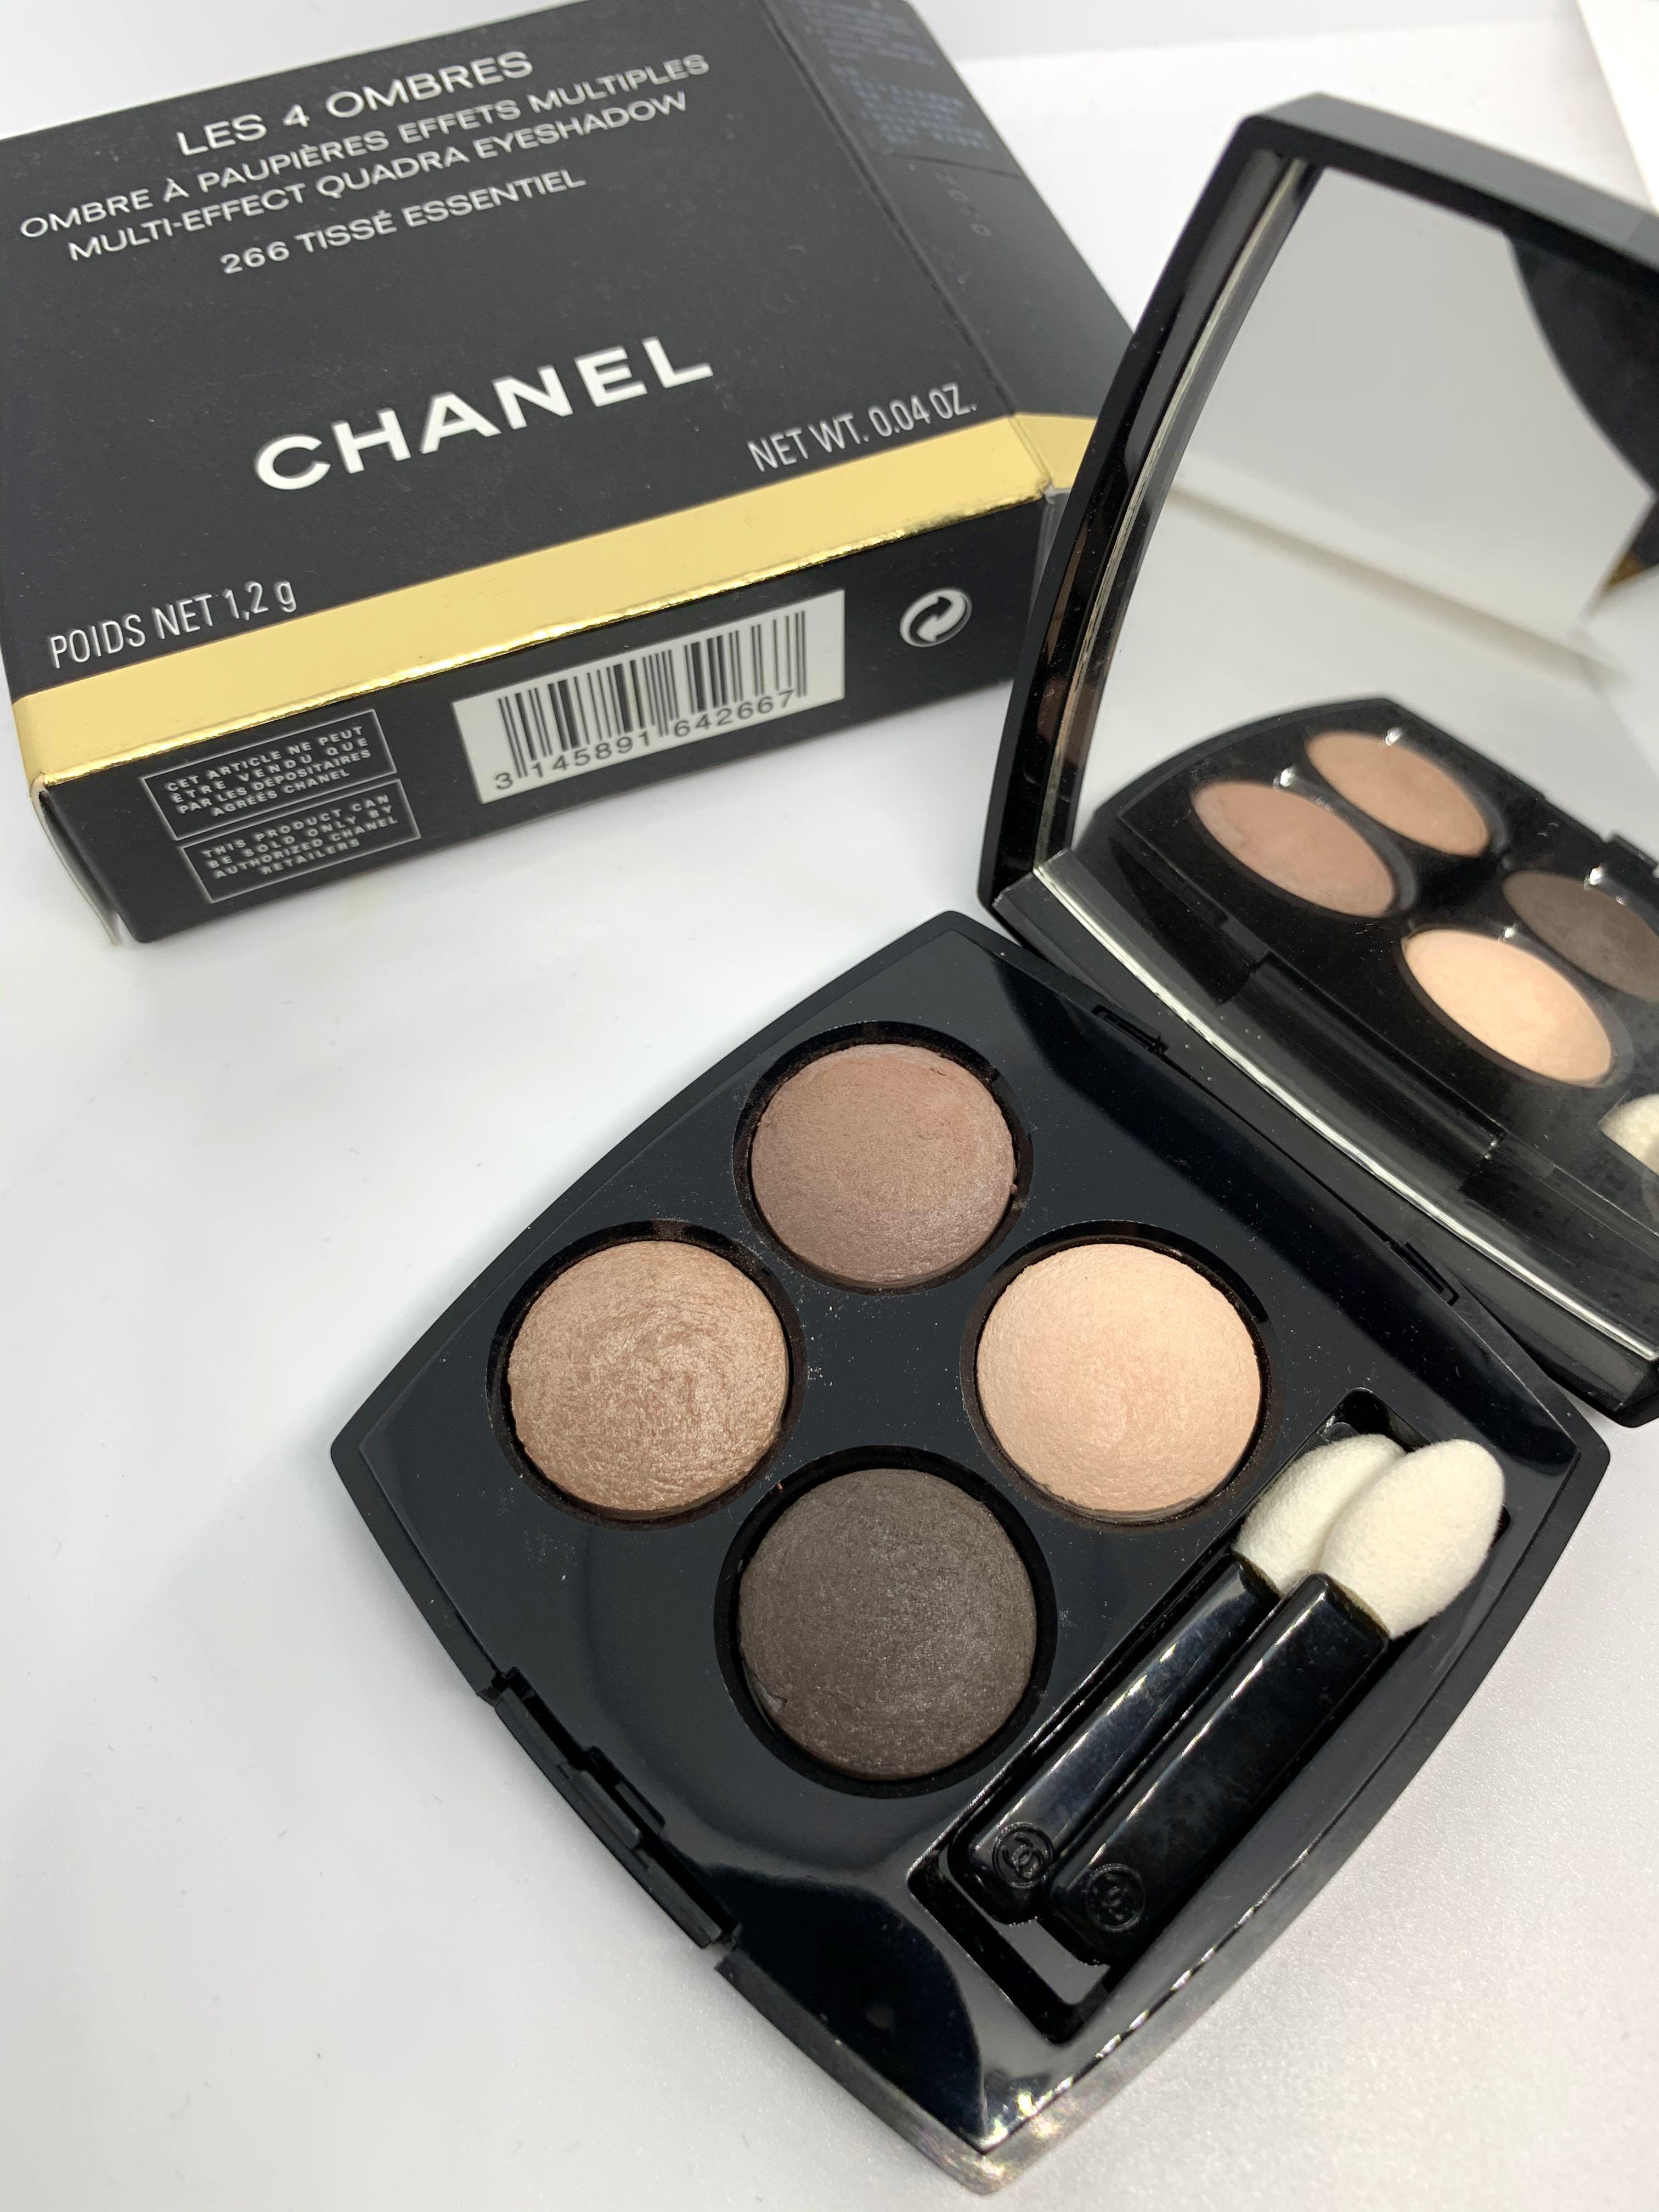 Chanel les 4 ombres eyeshadow palette #266 tisse essentiel, 美容